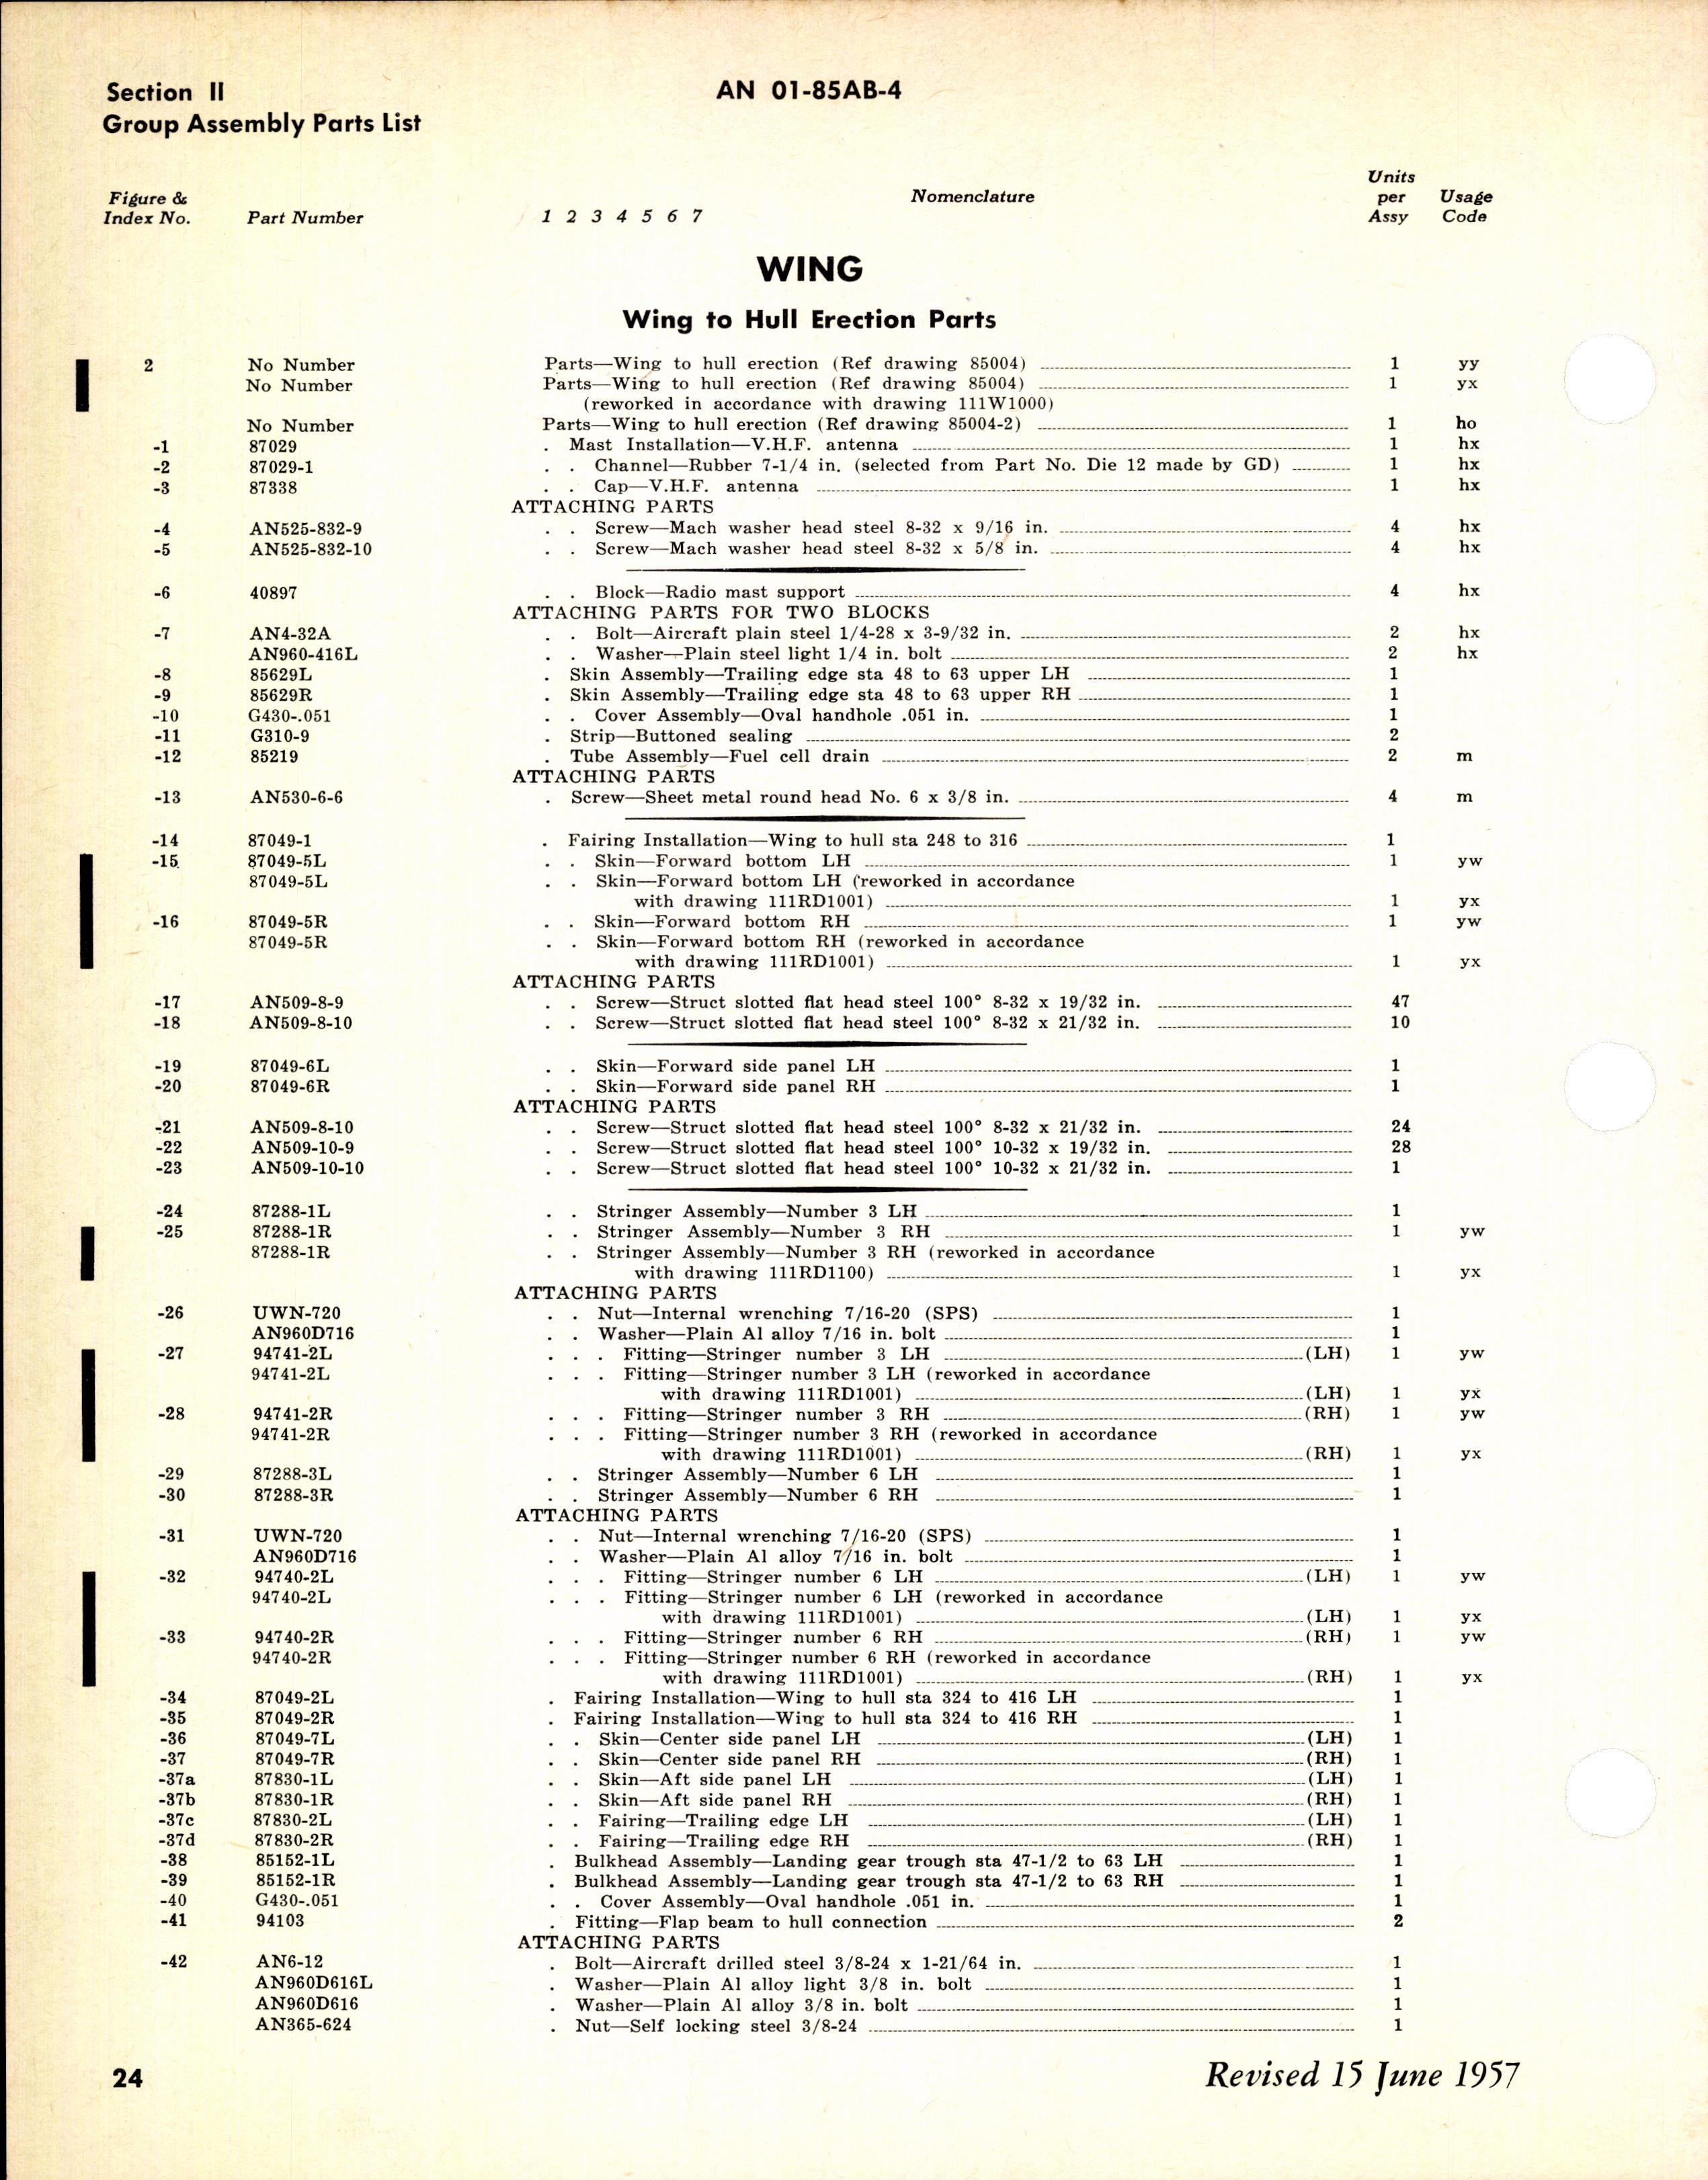 Sample page 72 from AirCorps Library document: Parts Catalog for SA-16A, SA-16B, and UF-1 Aircraft